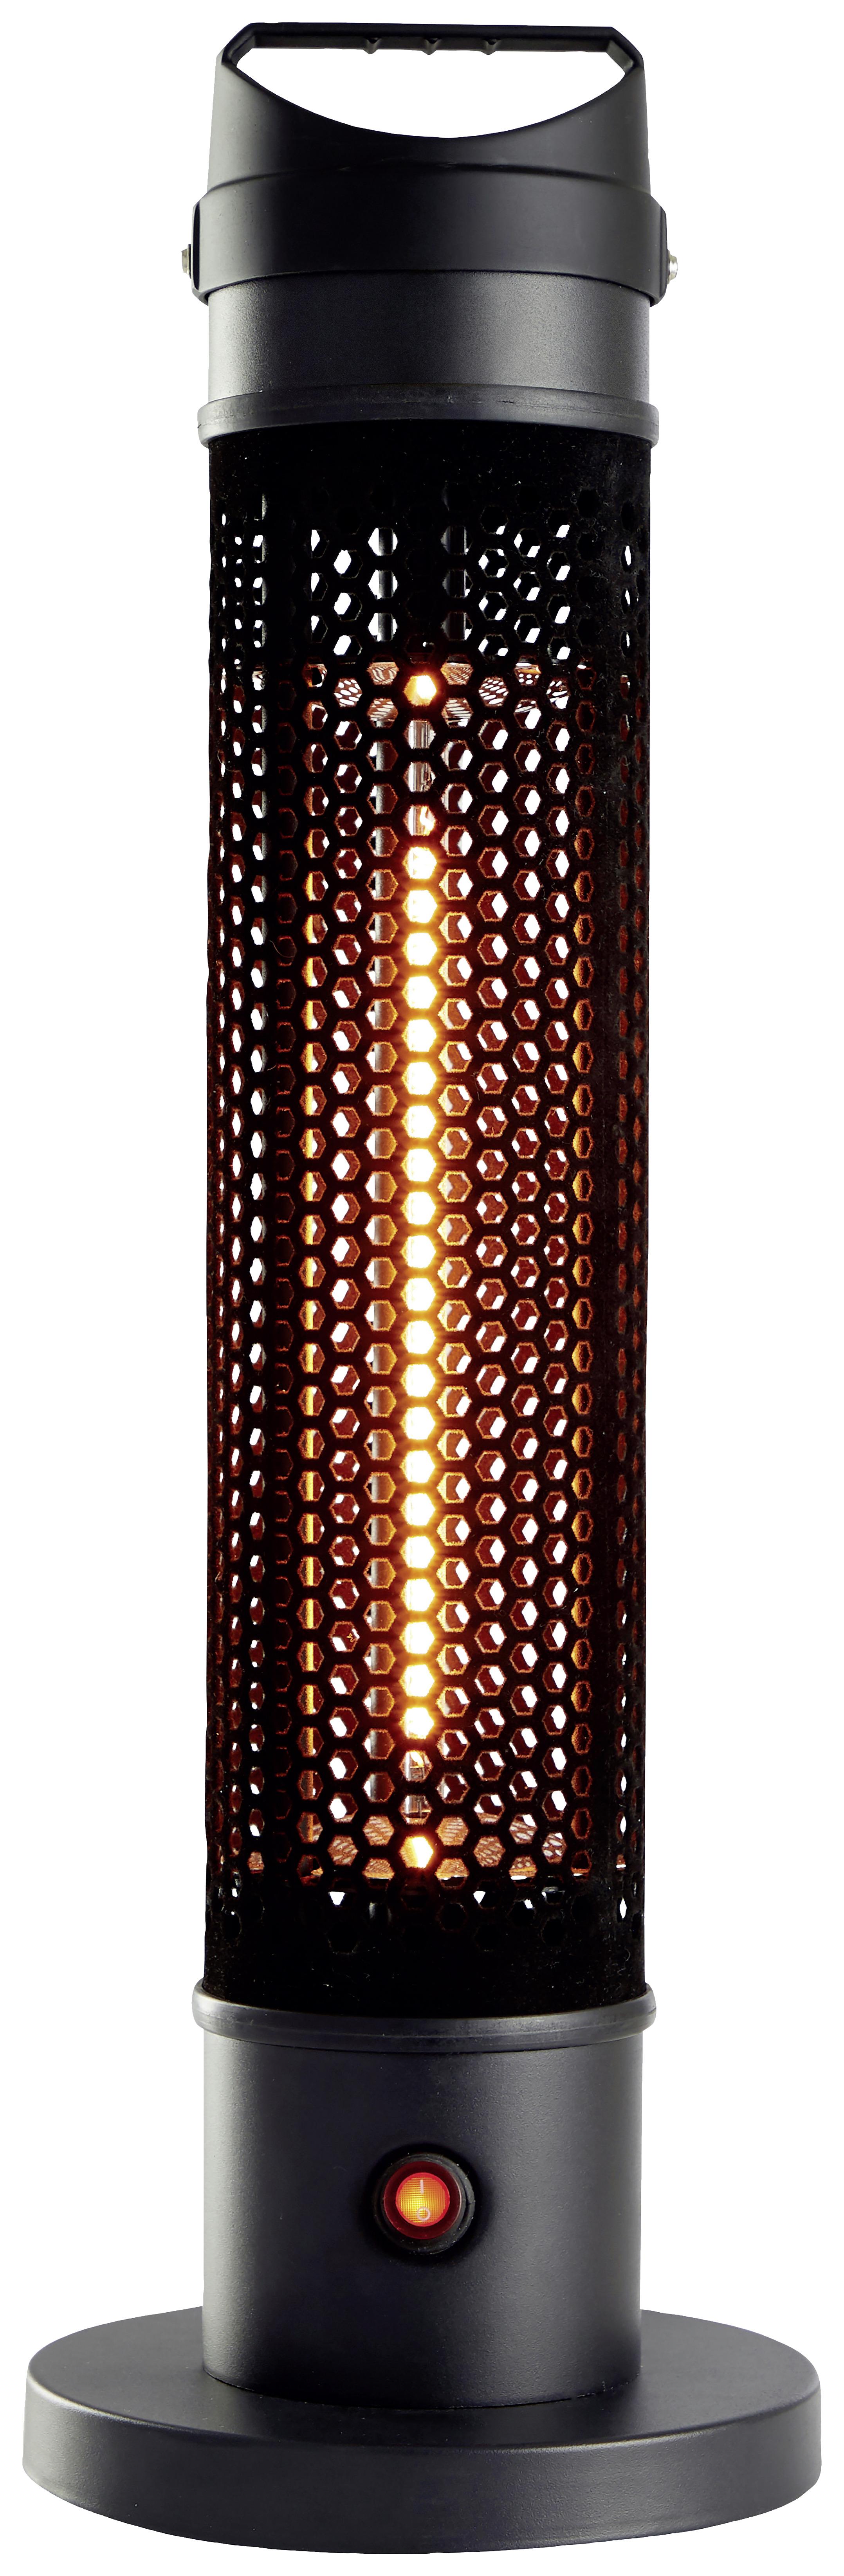 Terrassenstrahler Alpina Carbon 800W - MODERN, Kunststoff (20/61cm) - Alpina 5849